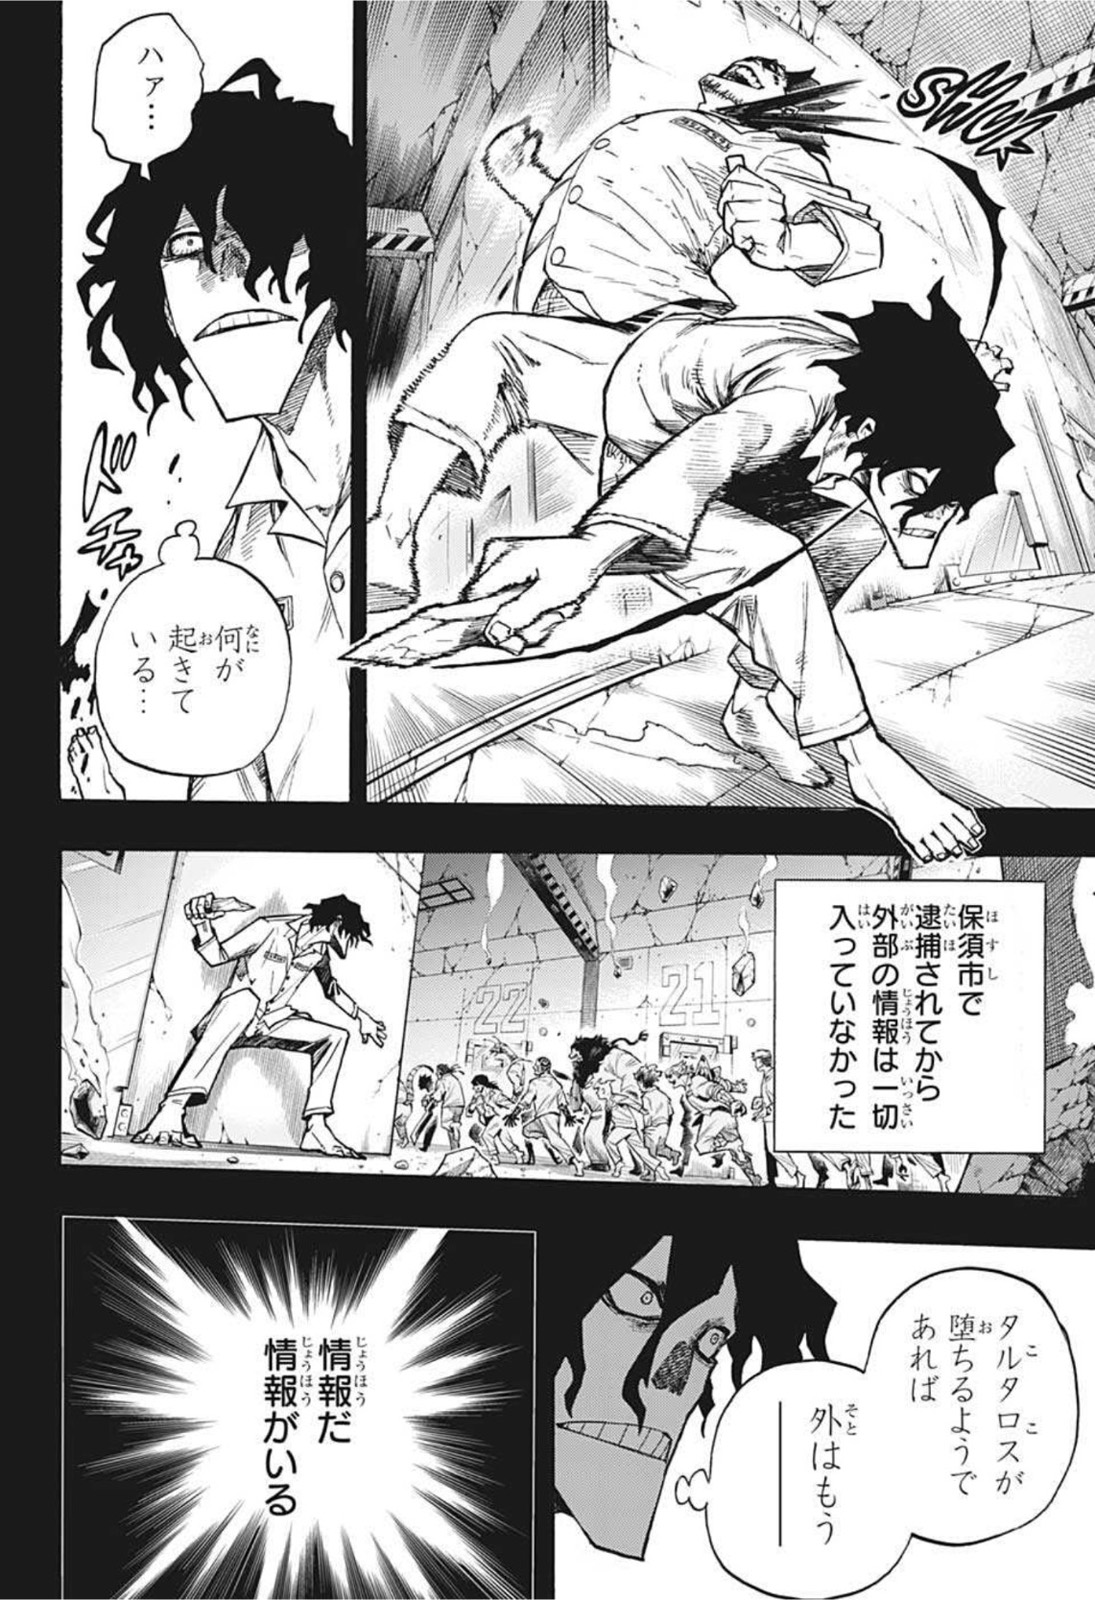 Boku no Hero Academia - Chapter 328 - Page 2